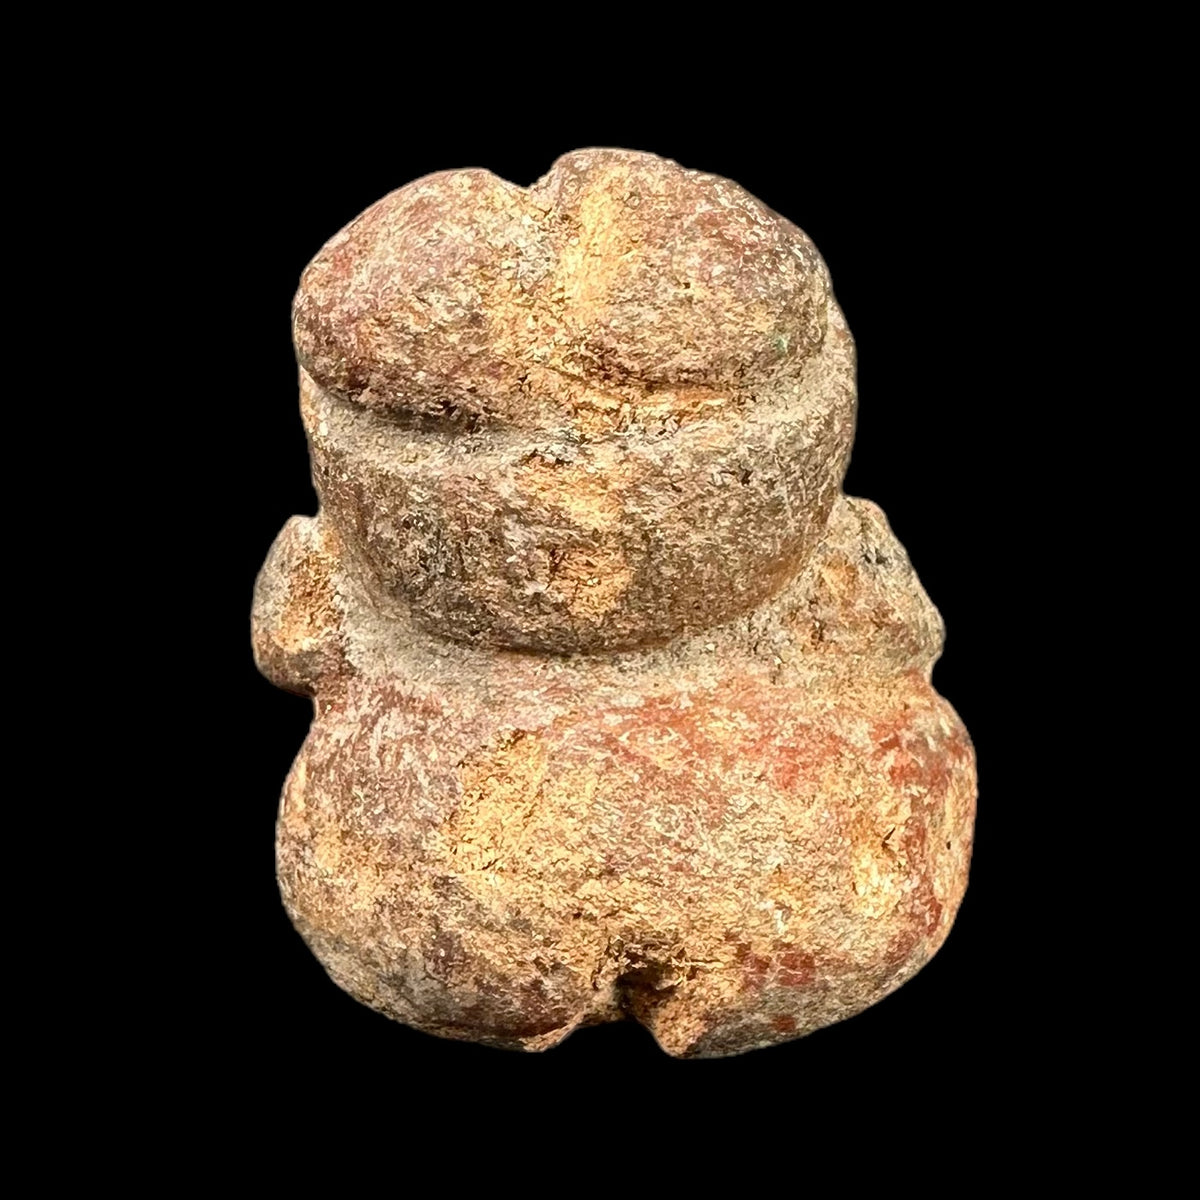 Miniature Pre-Columbian Valdivia rotund pottery figure